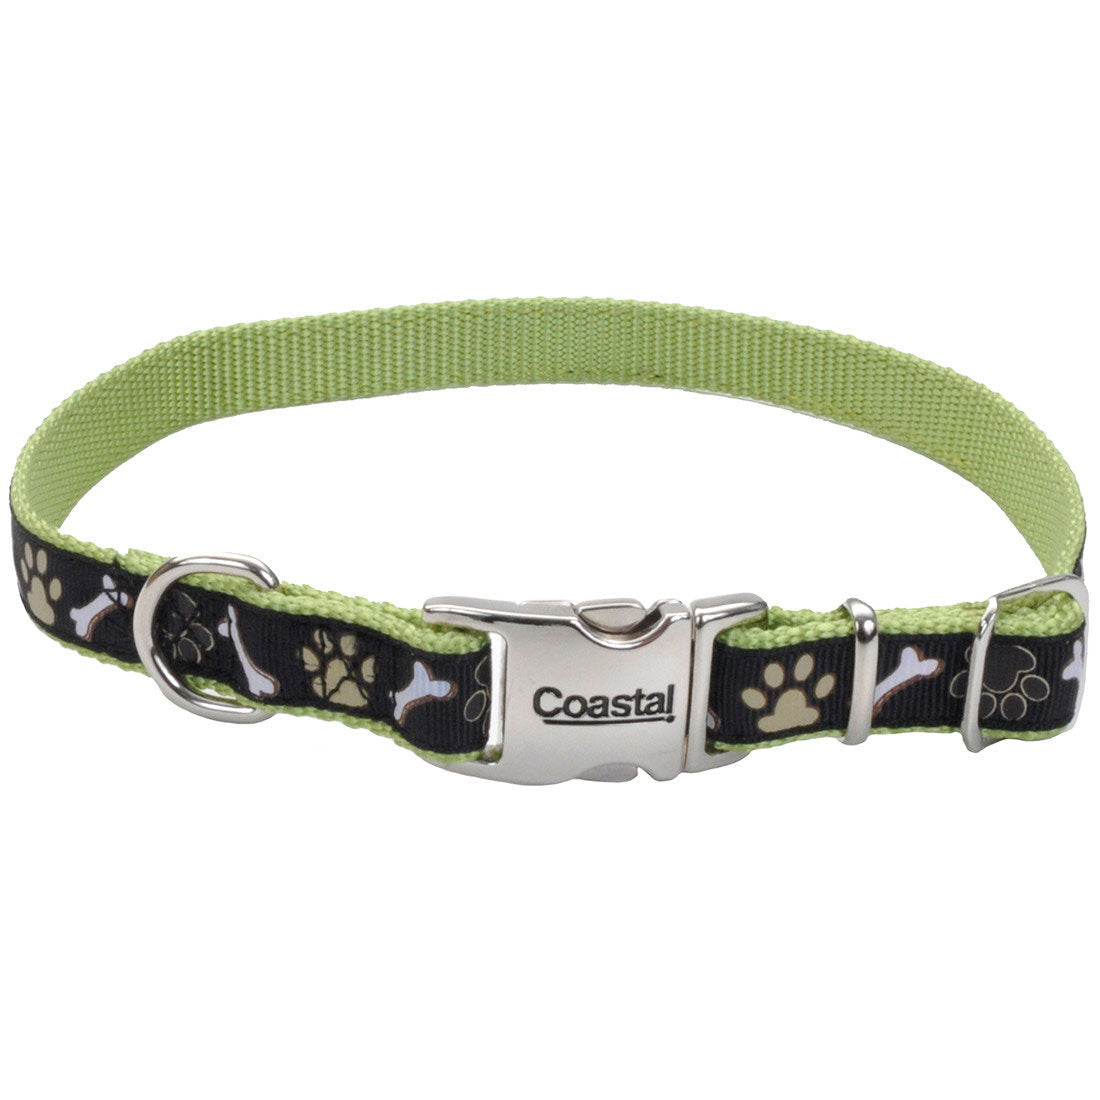 Coastal Ribbon Adjustable Dog Collar with Metal Clip Blue Plaid Large